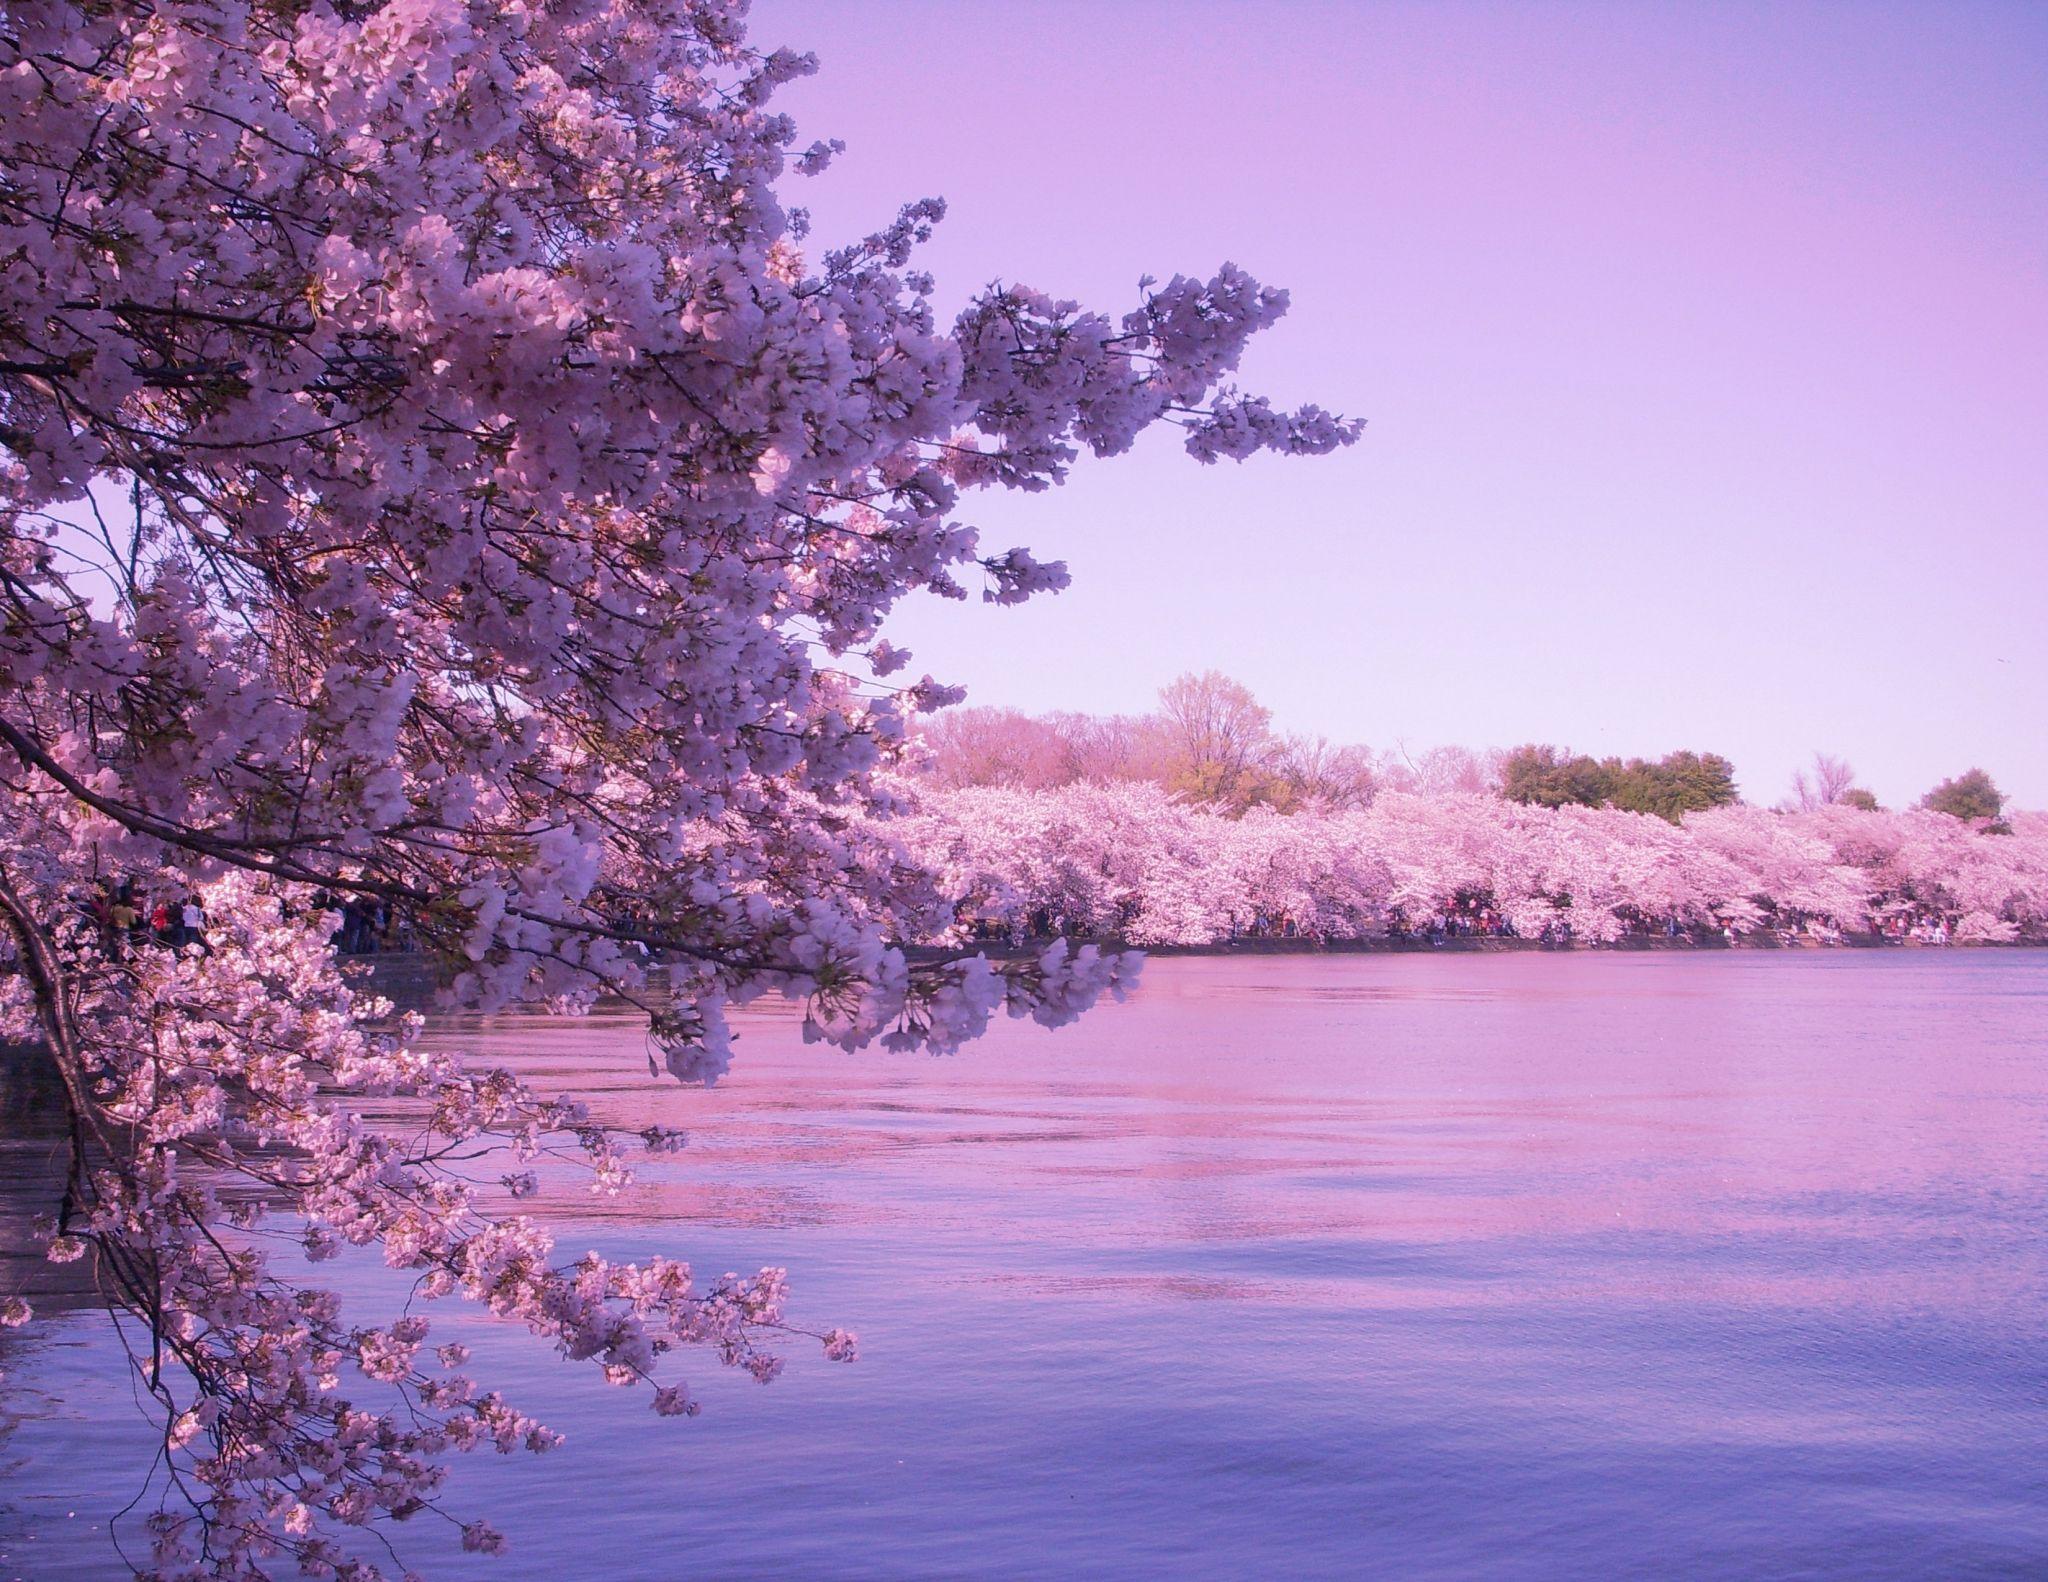 Cherry Blossom Desktop Wallpapers - Top Free Cherry Blossom Desktop